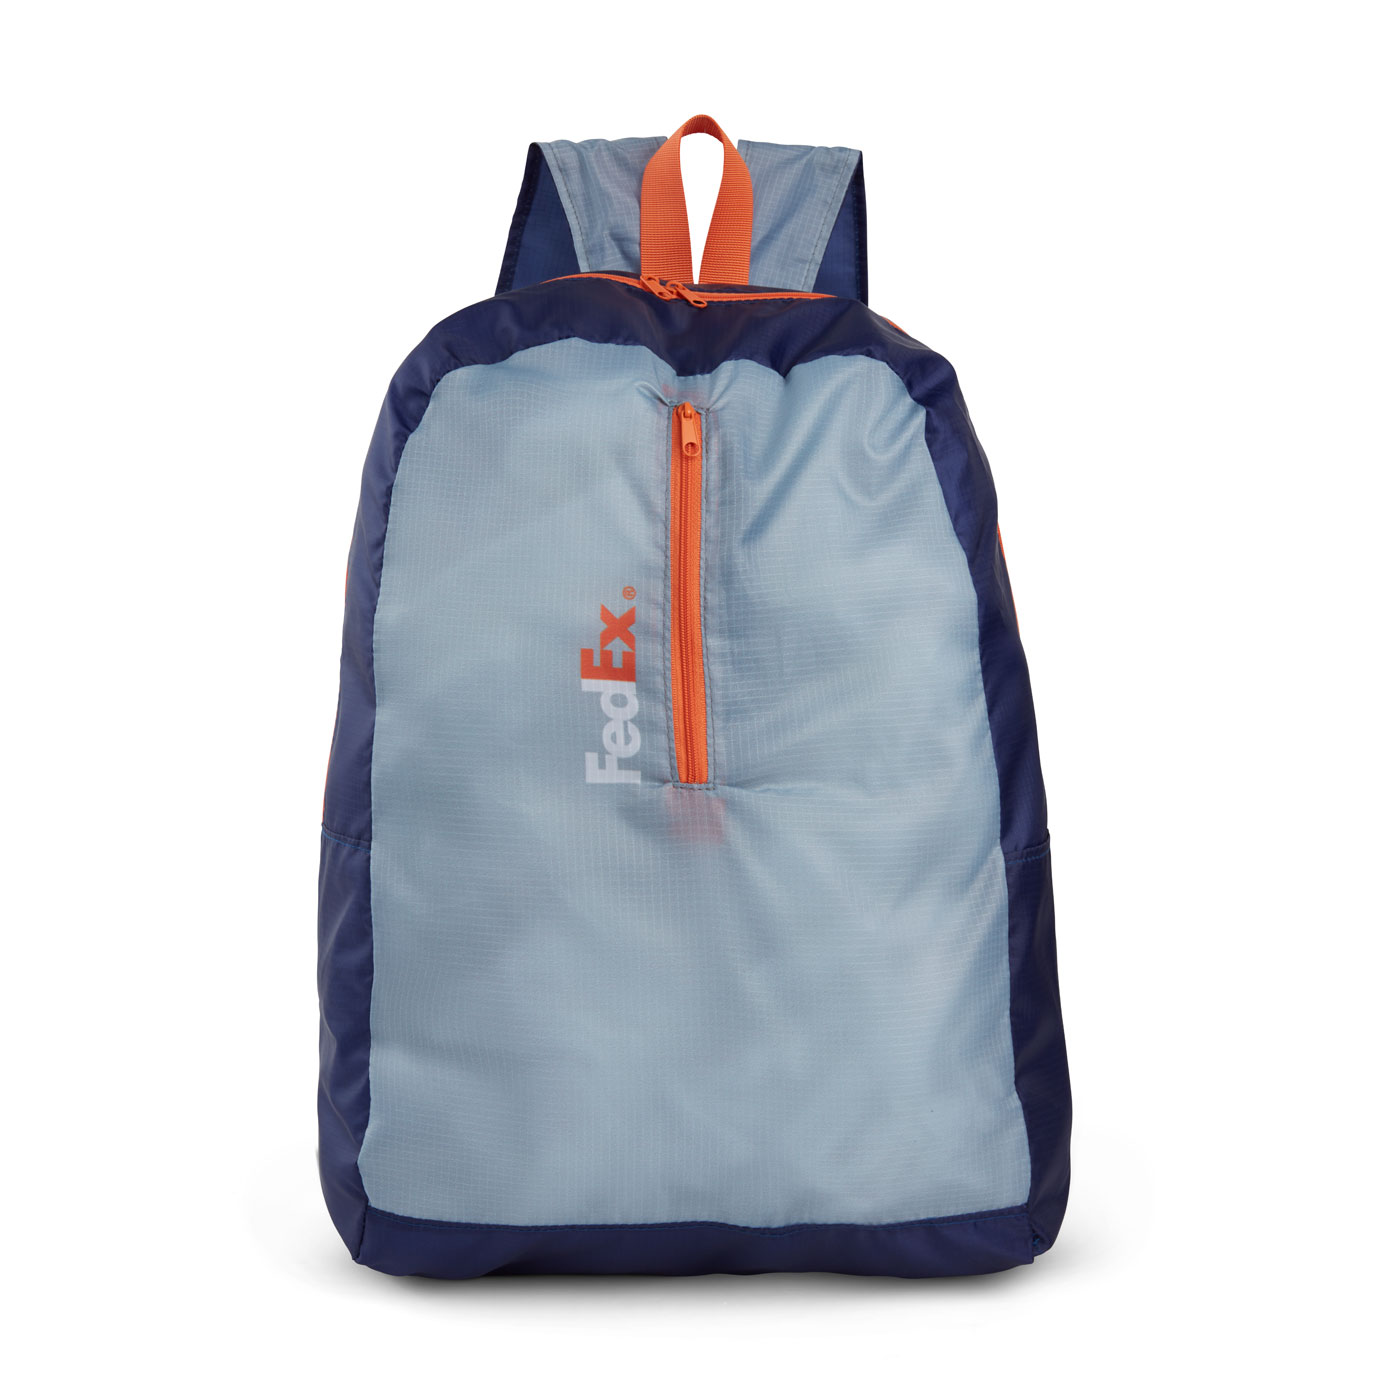 FedEx Knapsack Backpack | The FedEx Company Store